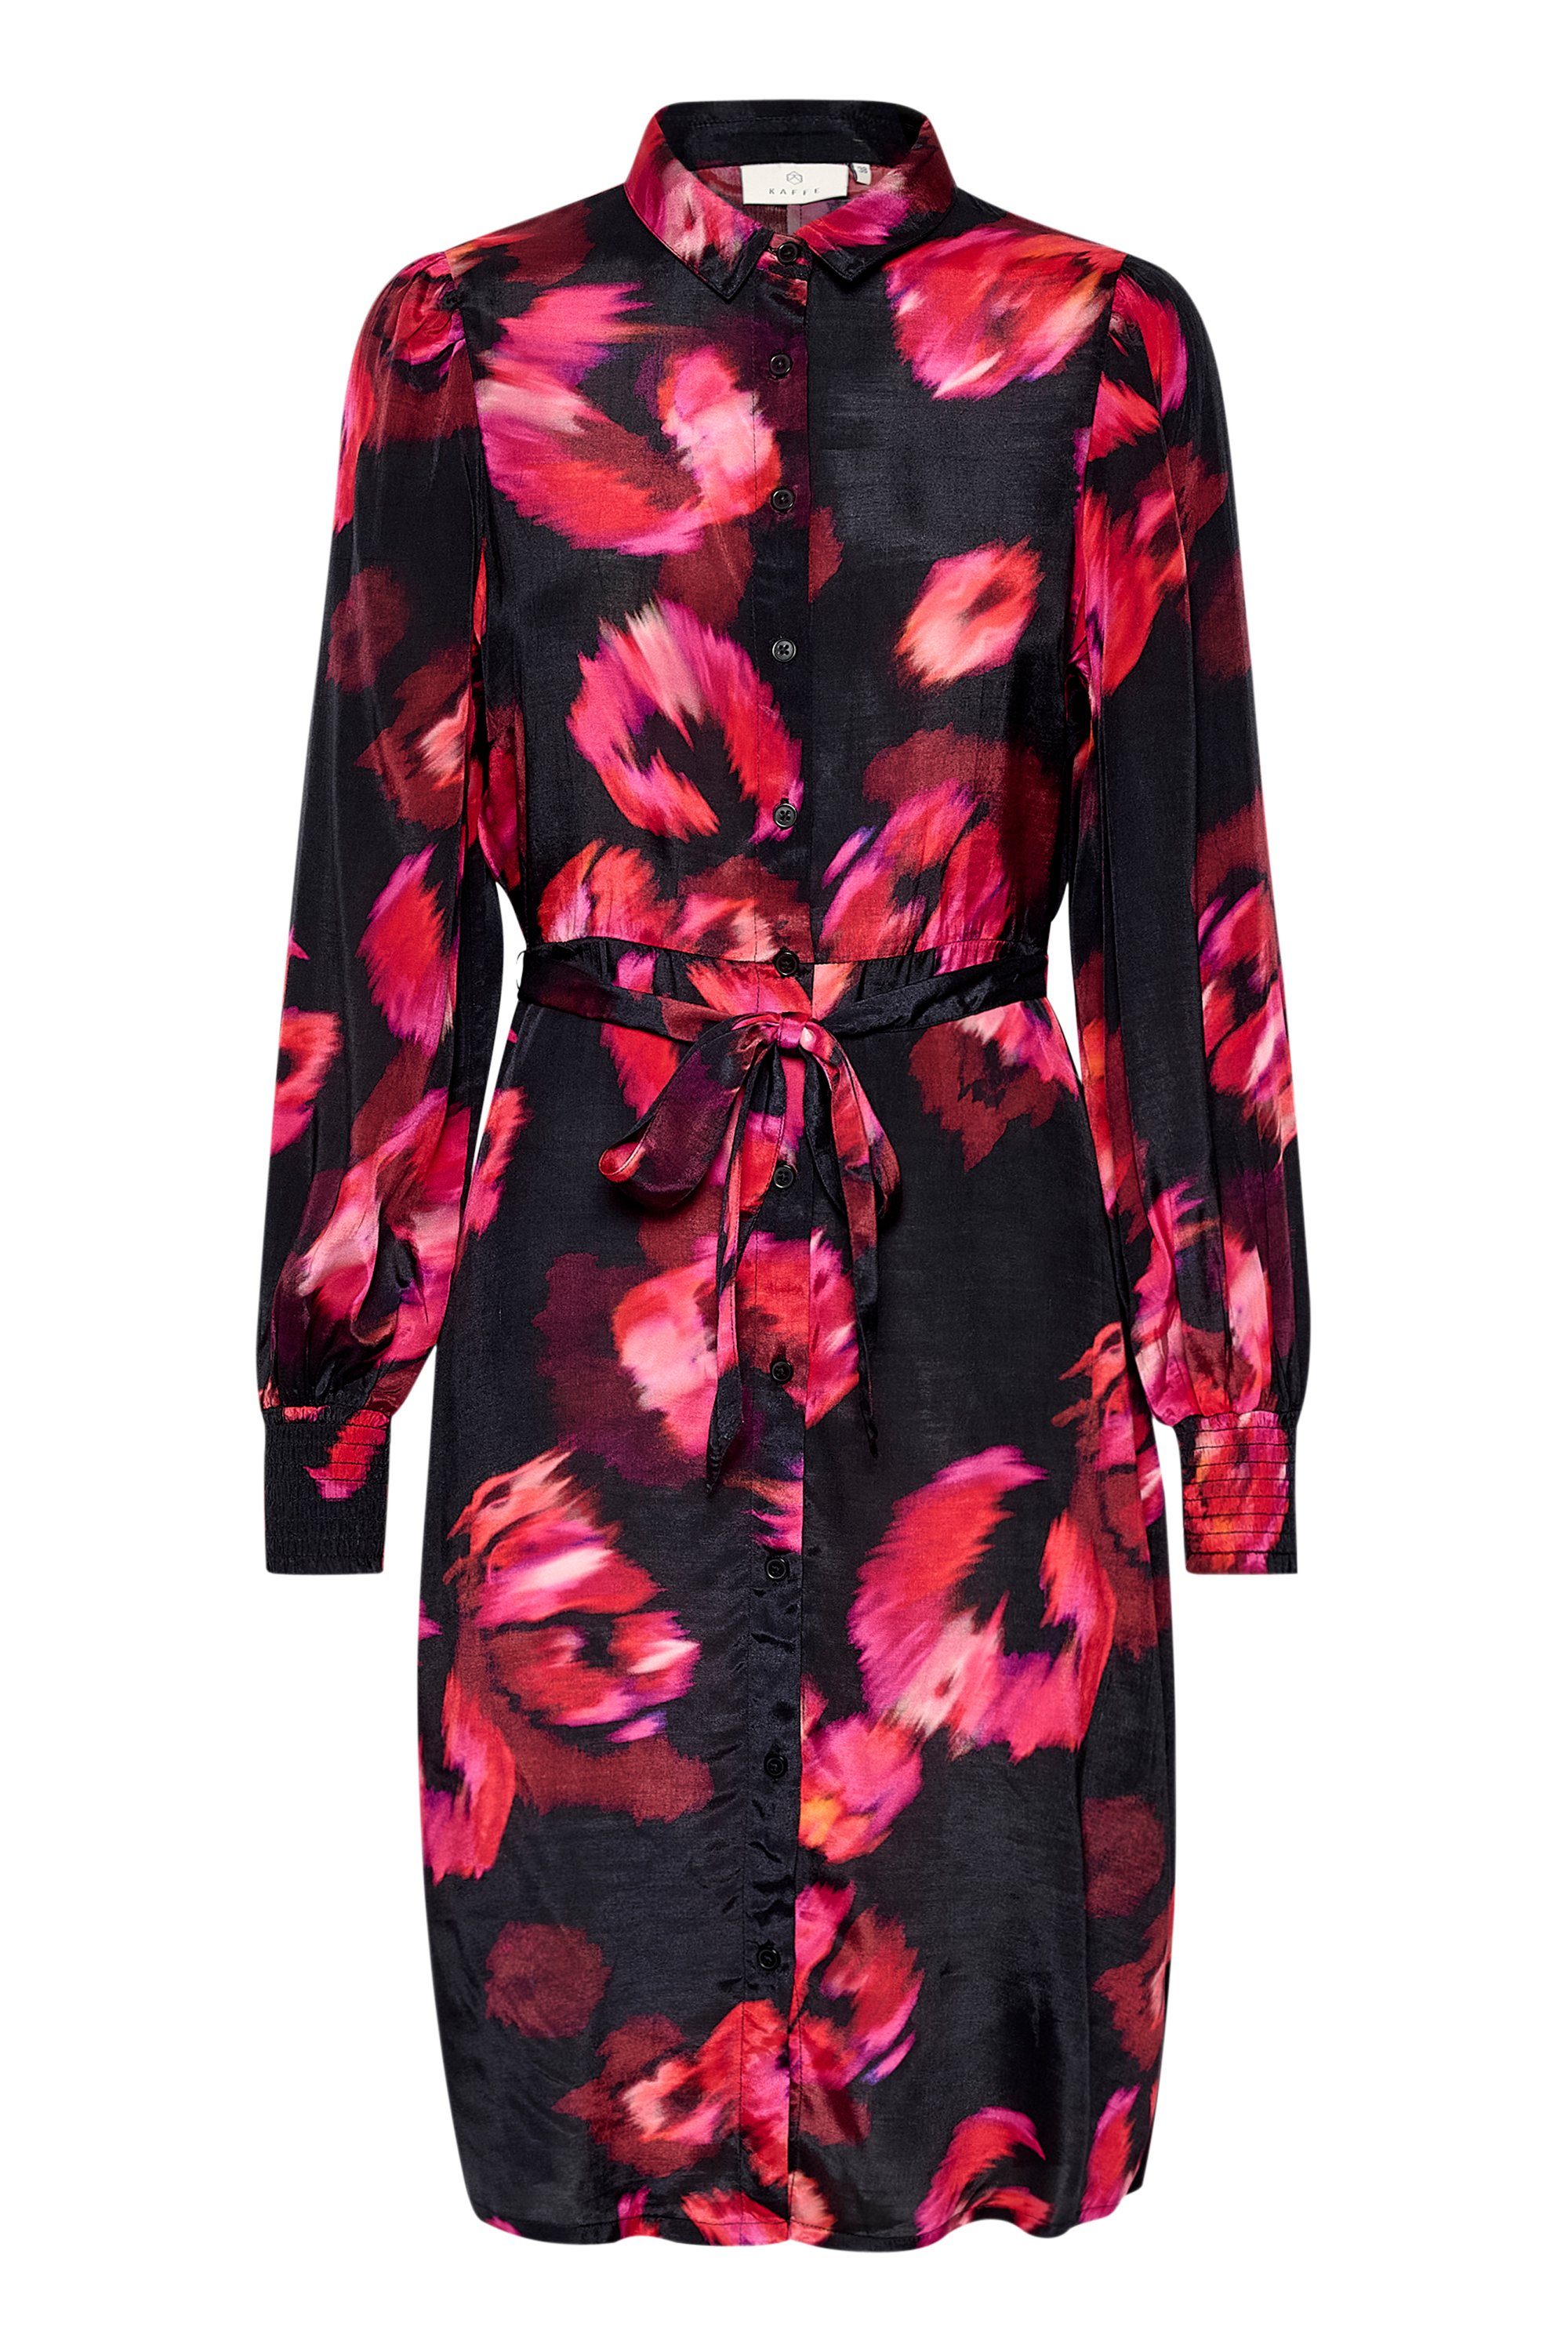 KAFFE Sun-Dried Flower KAlouisa Jerseykleid Kleid Print